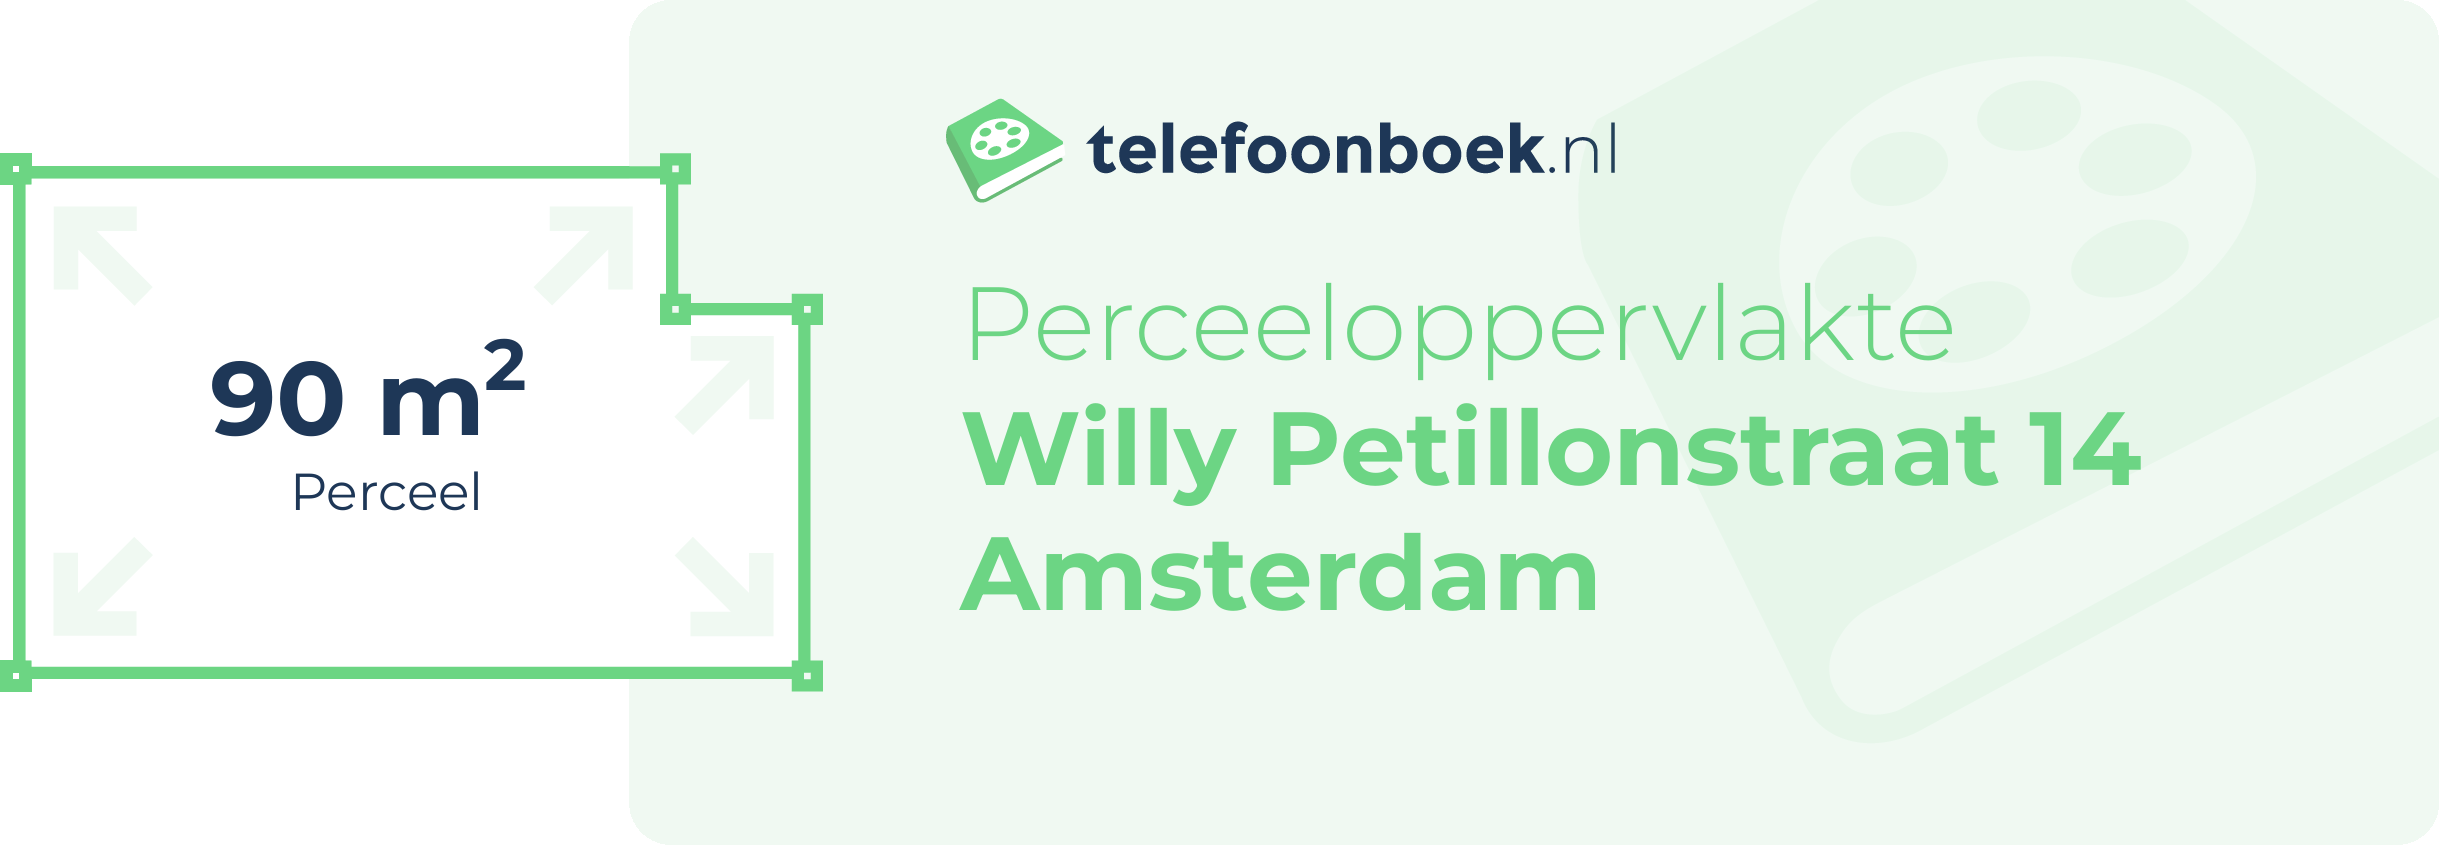 Perceeloppervlakte Willy Petillonstraat 14 Amsterdam